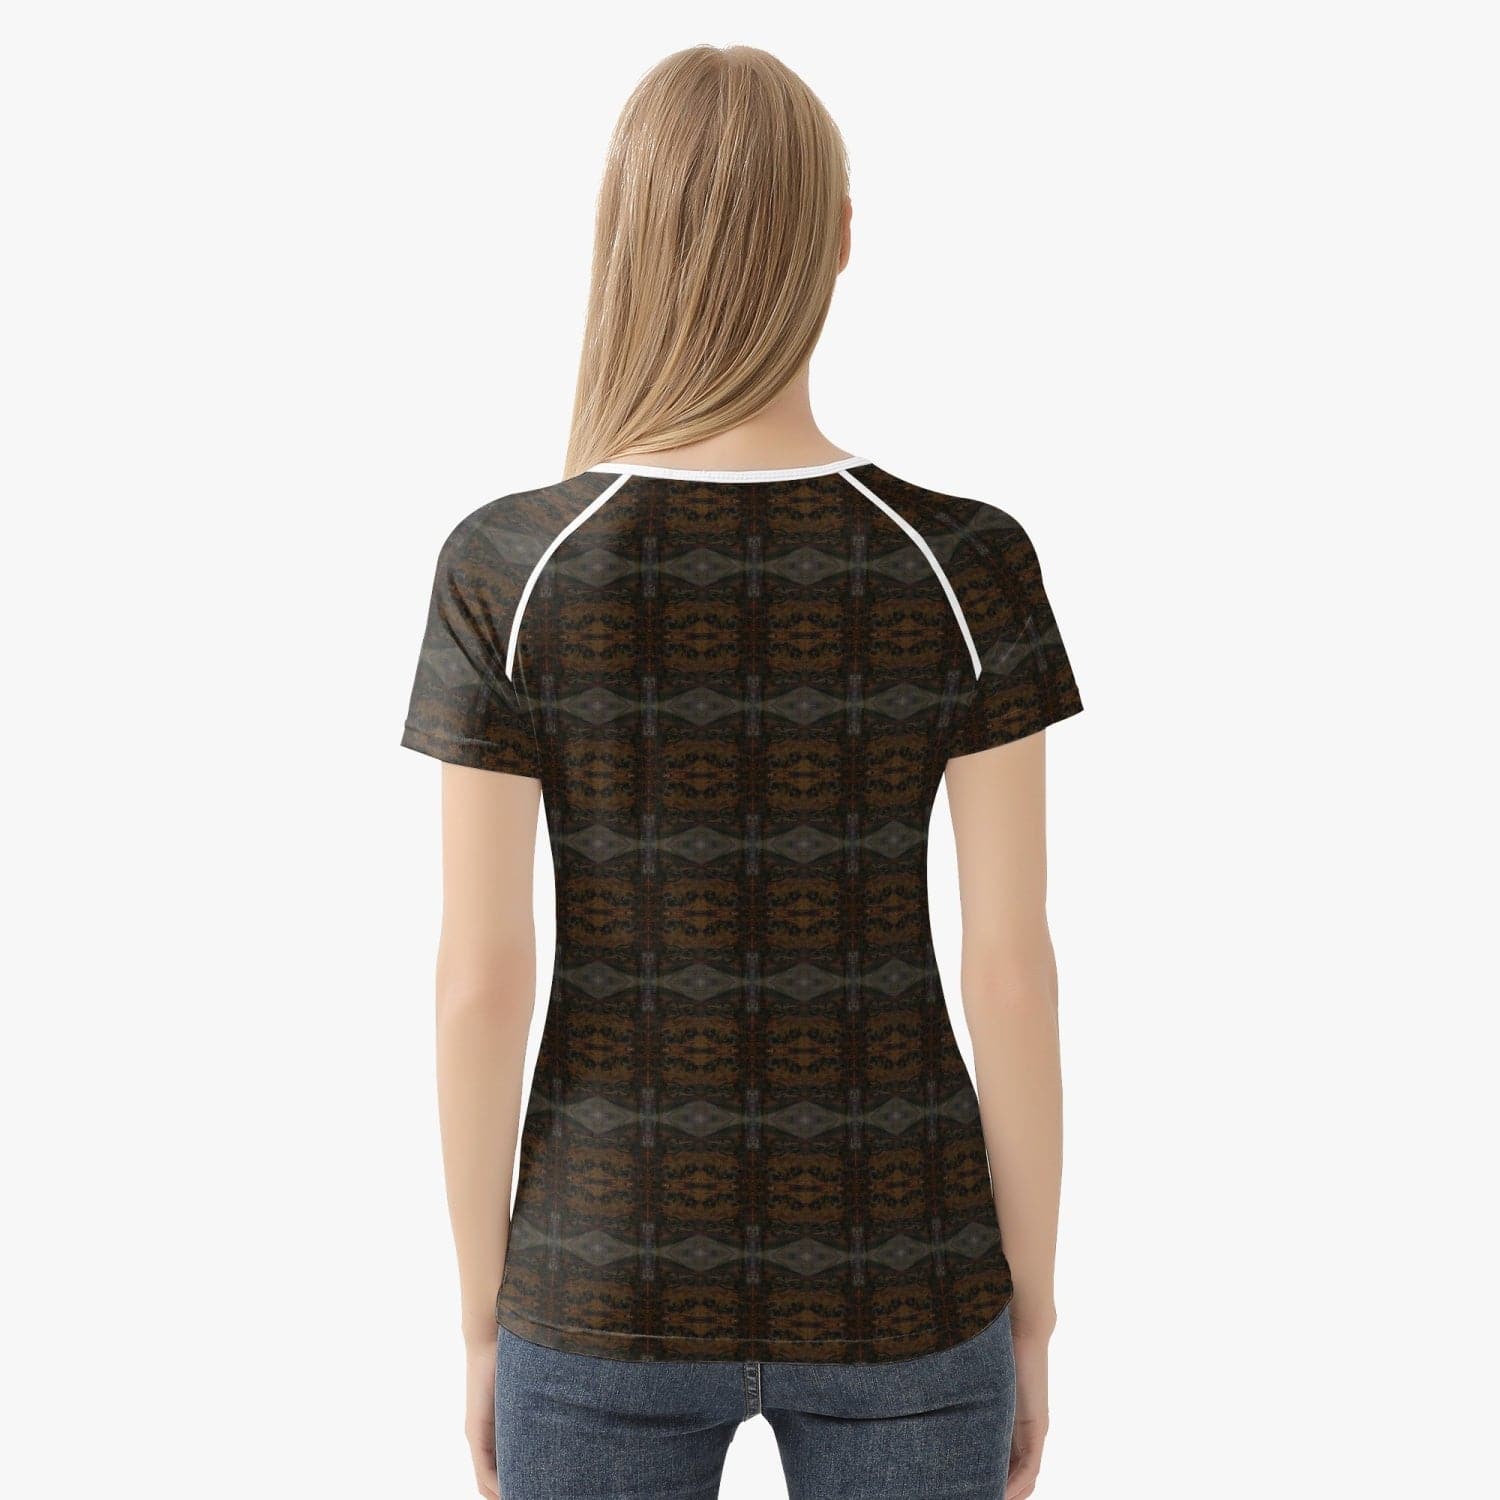 New Beginnings Streetwear  Black Gold and Brown Patterned, Handmade Stylish Women T-shirt Sports/ Yoga Top, by Sensus Studio Design